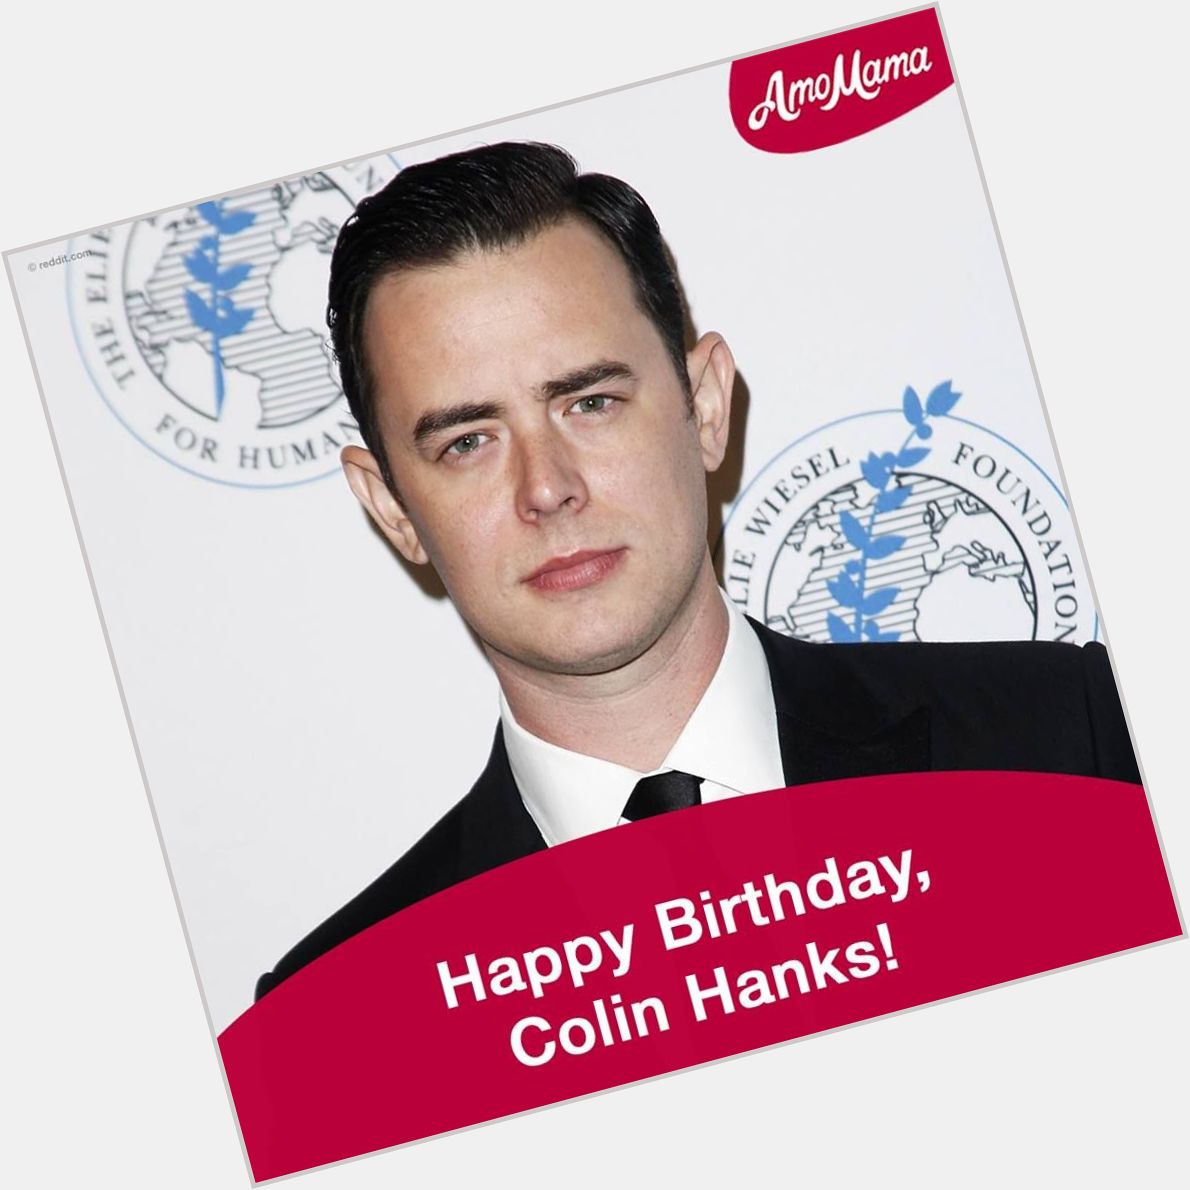    Let\s wish Colin Hanks a happy 41st birthday!  